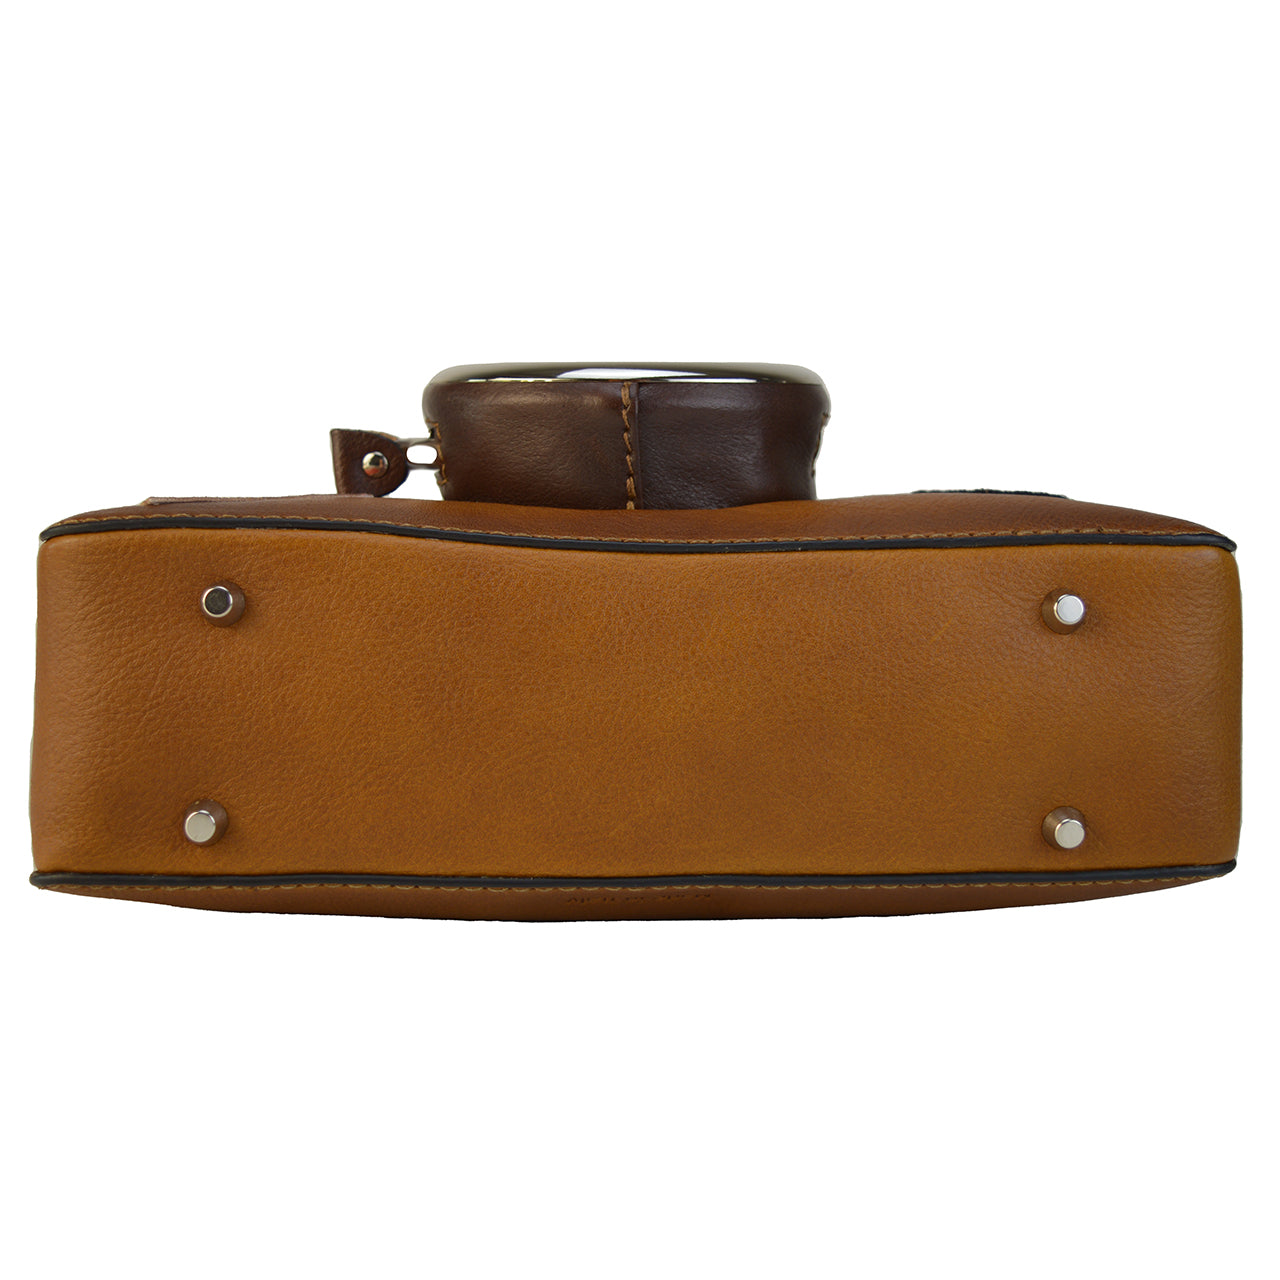 Pratesi Photocamera Bruce Bag in genuine Italian leather - Vegetable Tanned Italian Leather Brown